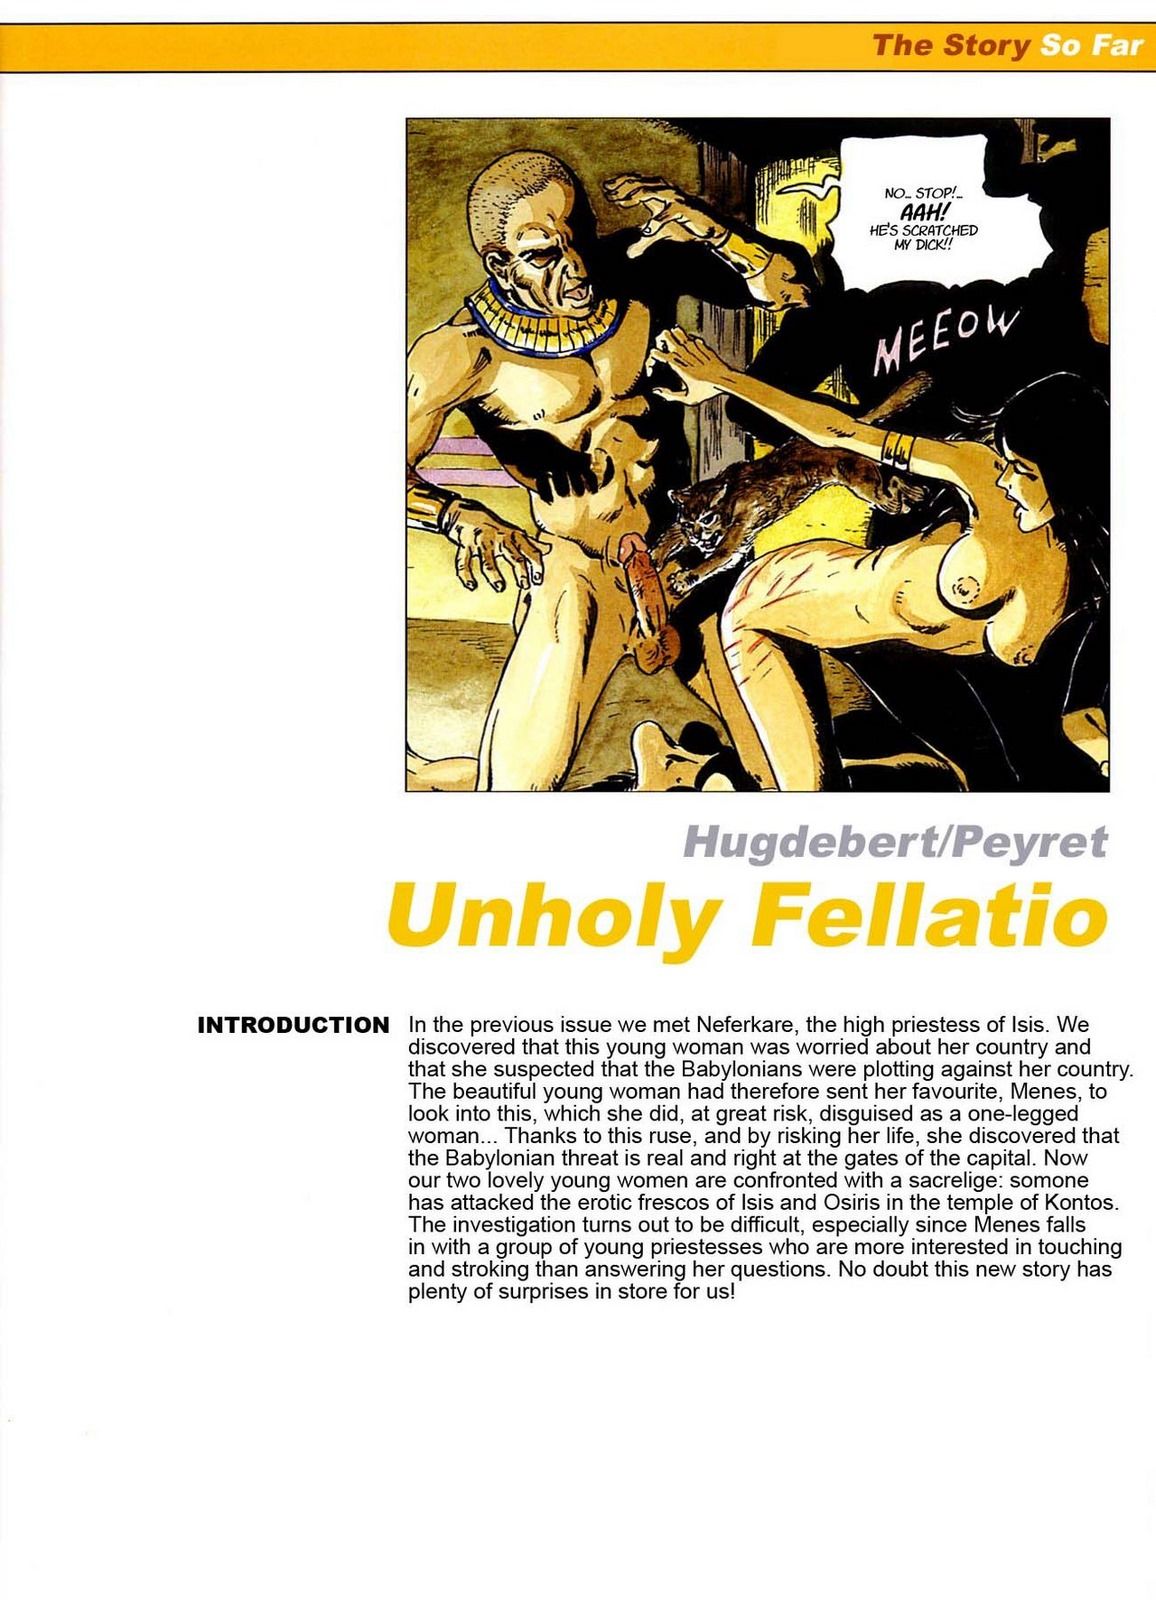 Unholy Fellatio by Hugdebert page 2